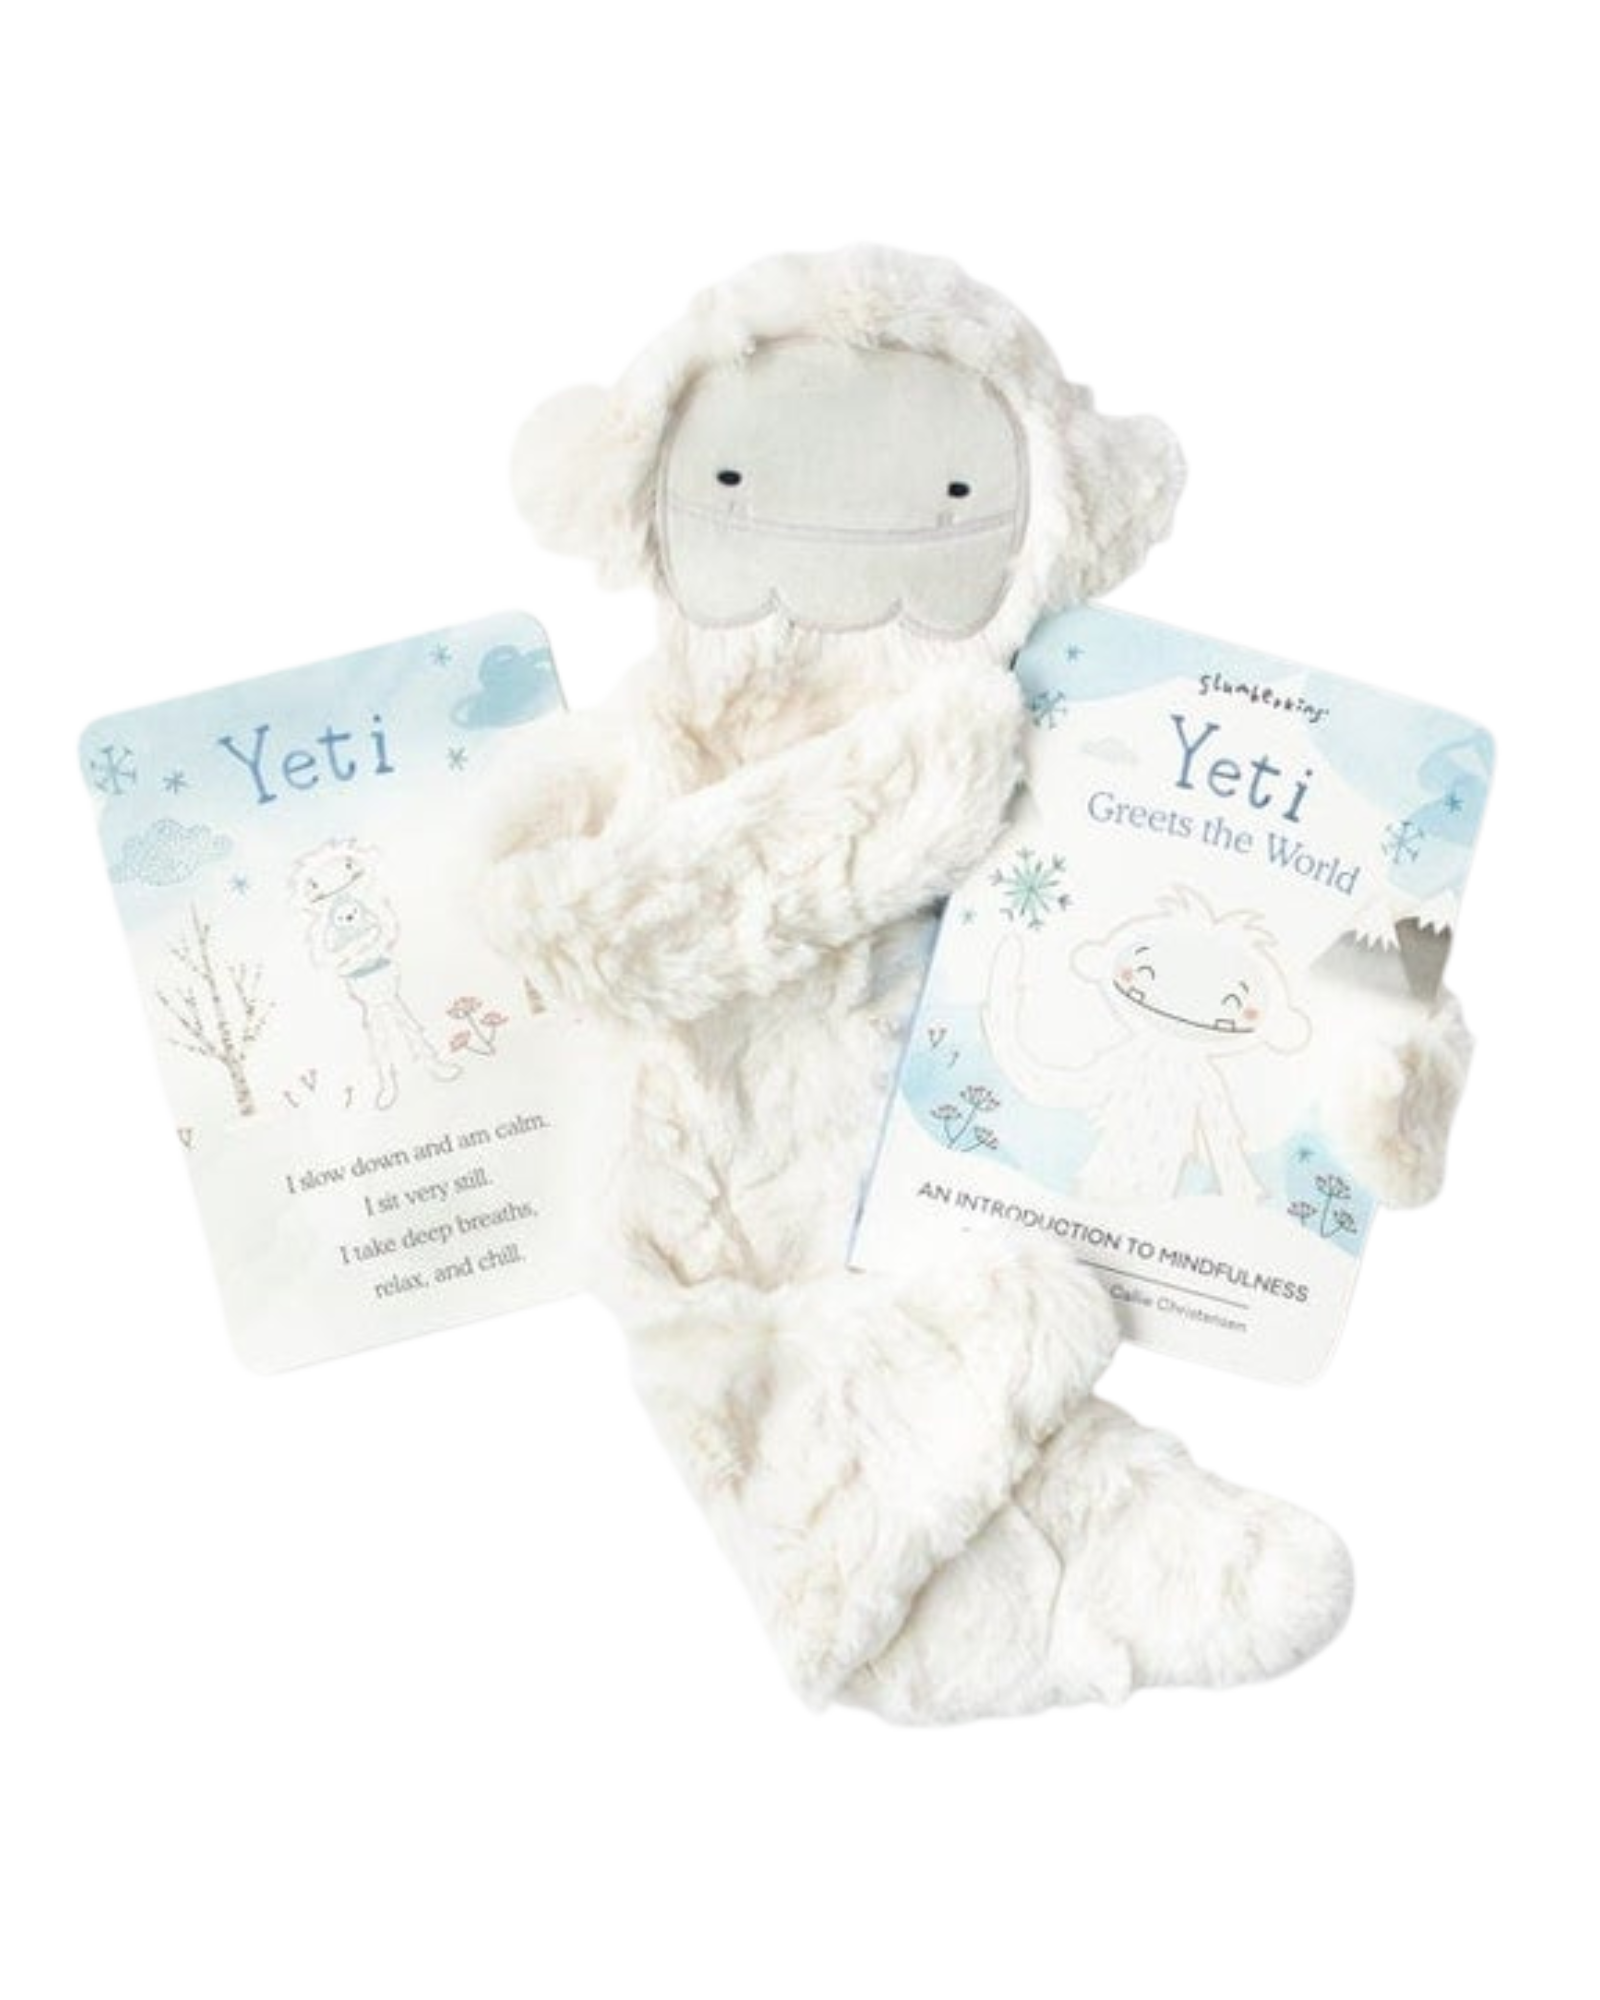 Fuzzy white Alpine Yeti slumberkin snuggler holding Yeti board book and next to Yeti card